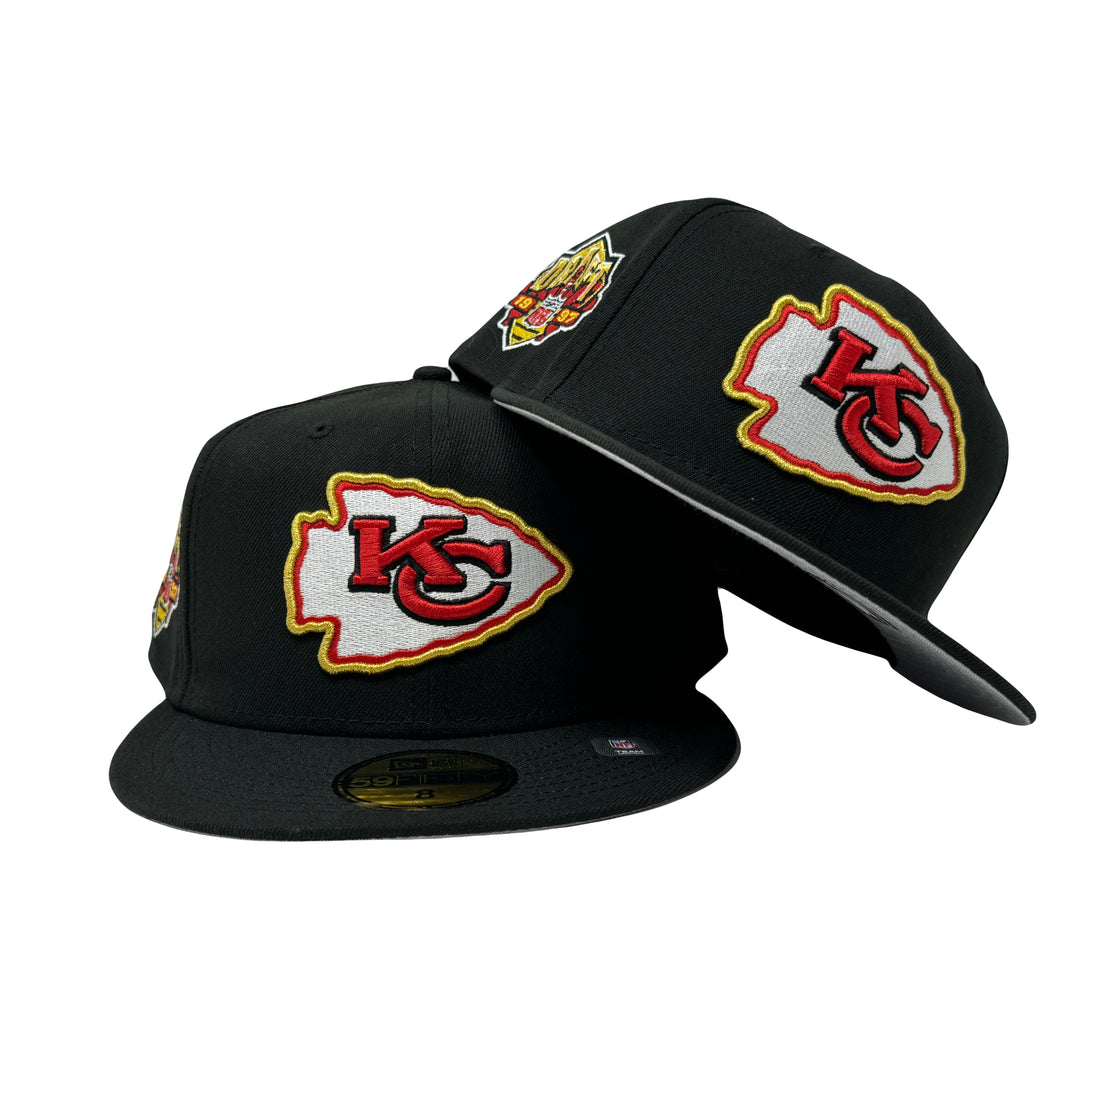 Kansas City Chiefs 1997 NFL Draft 5950 New Era Fitted Hat